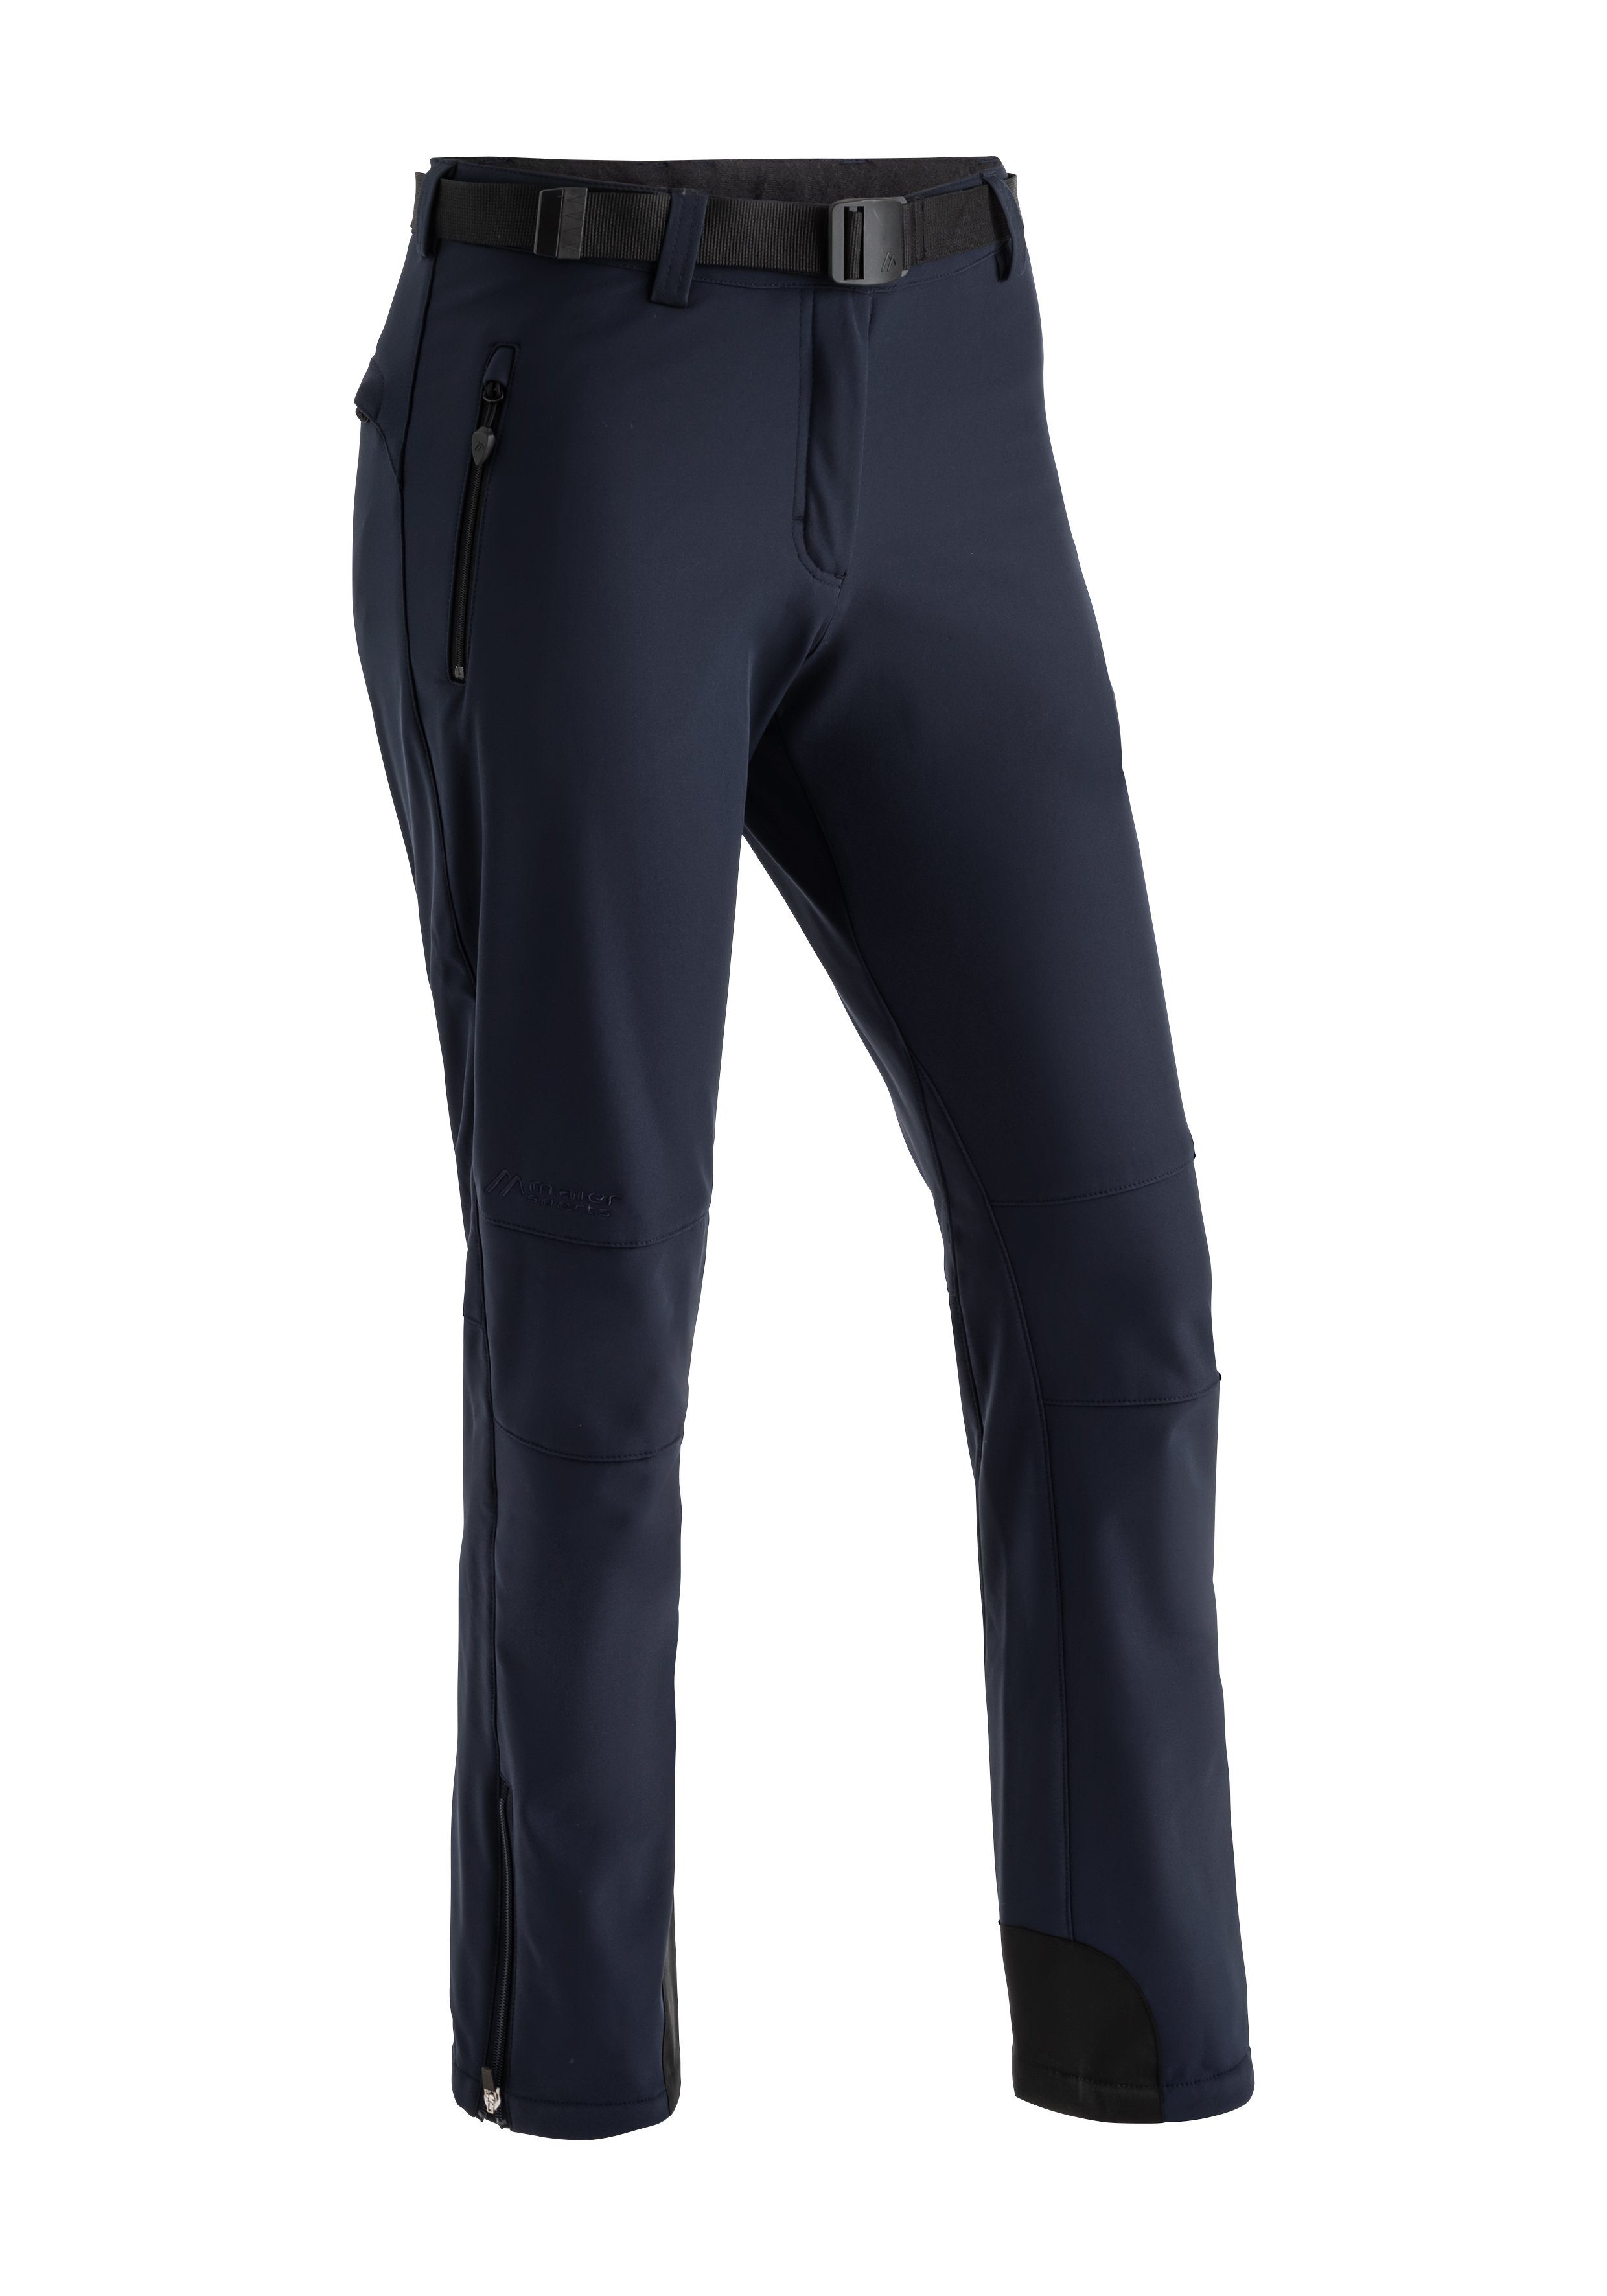 Maier Sports Funktionshose Tech Pants W Warme Softshellhose, elastisch und winddicht dunkelblau